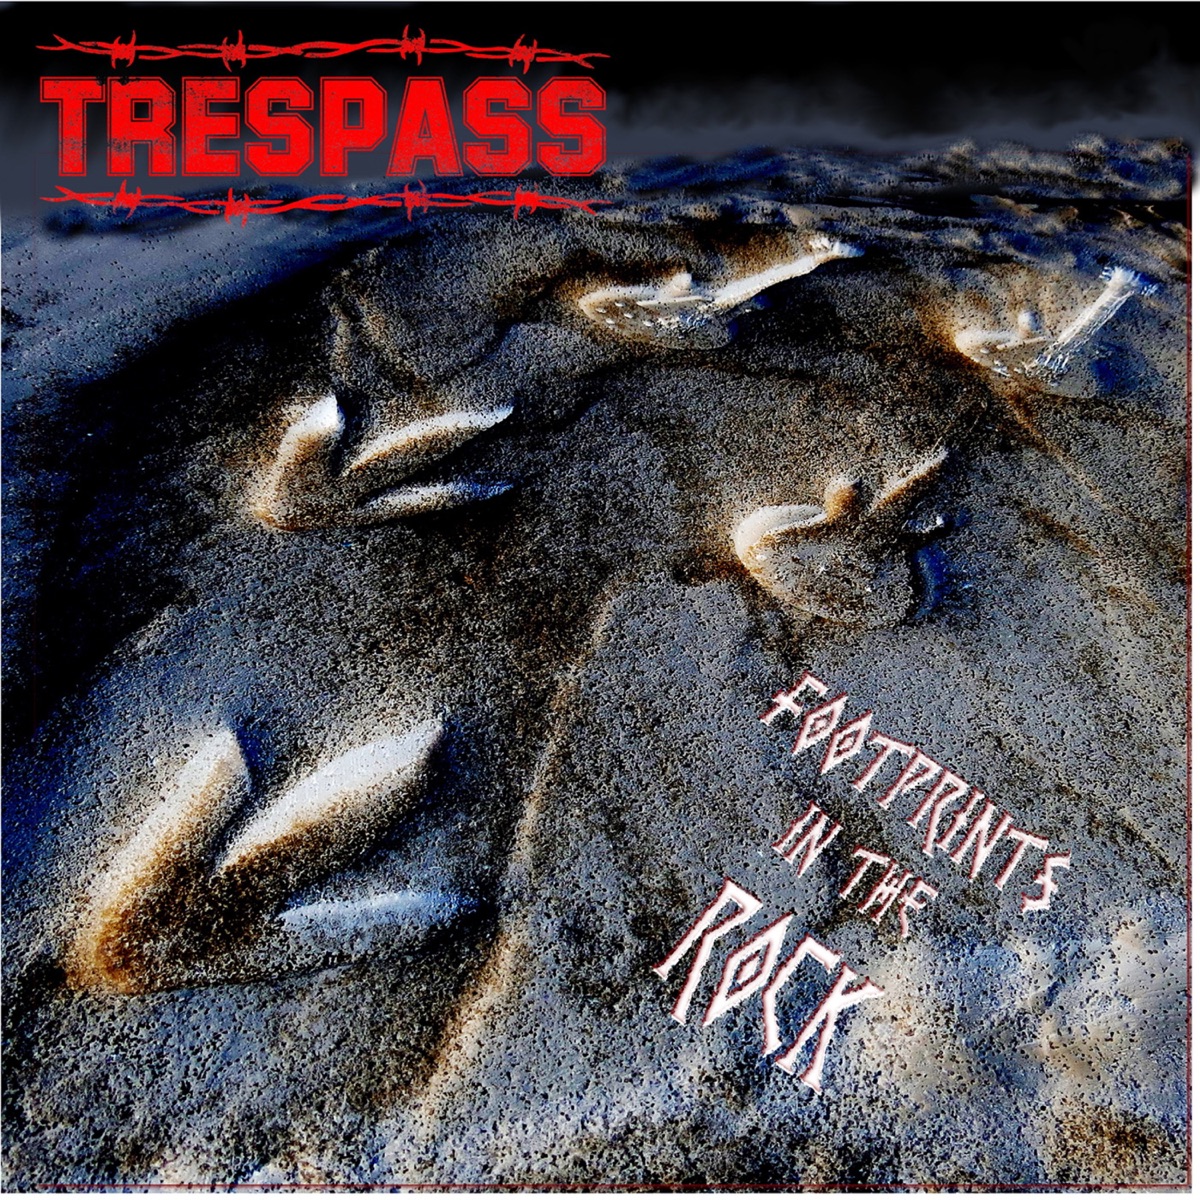 Morning Lights - Album by Trespass - Apple Music